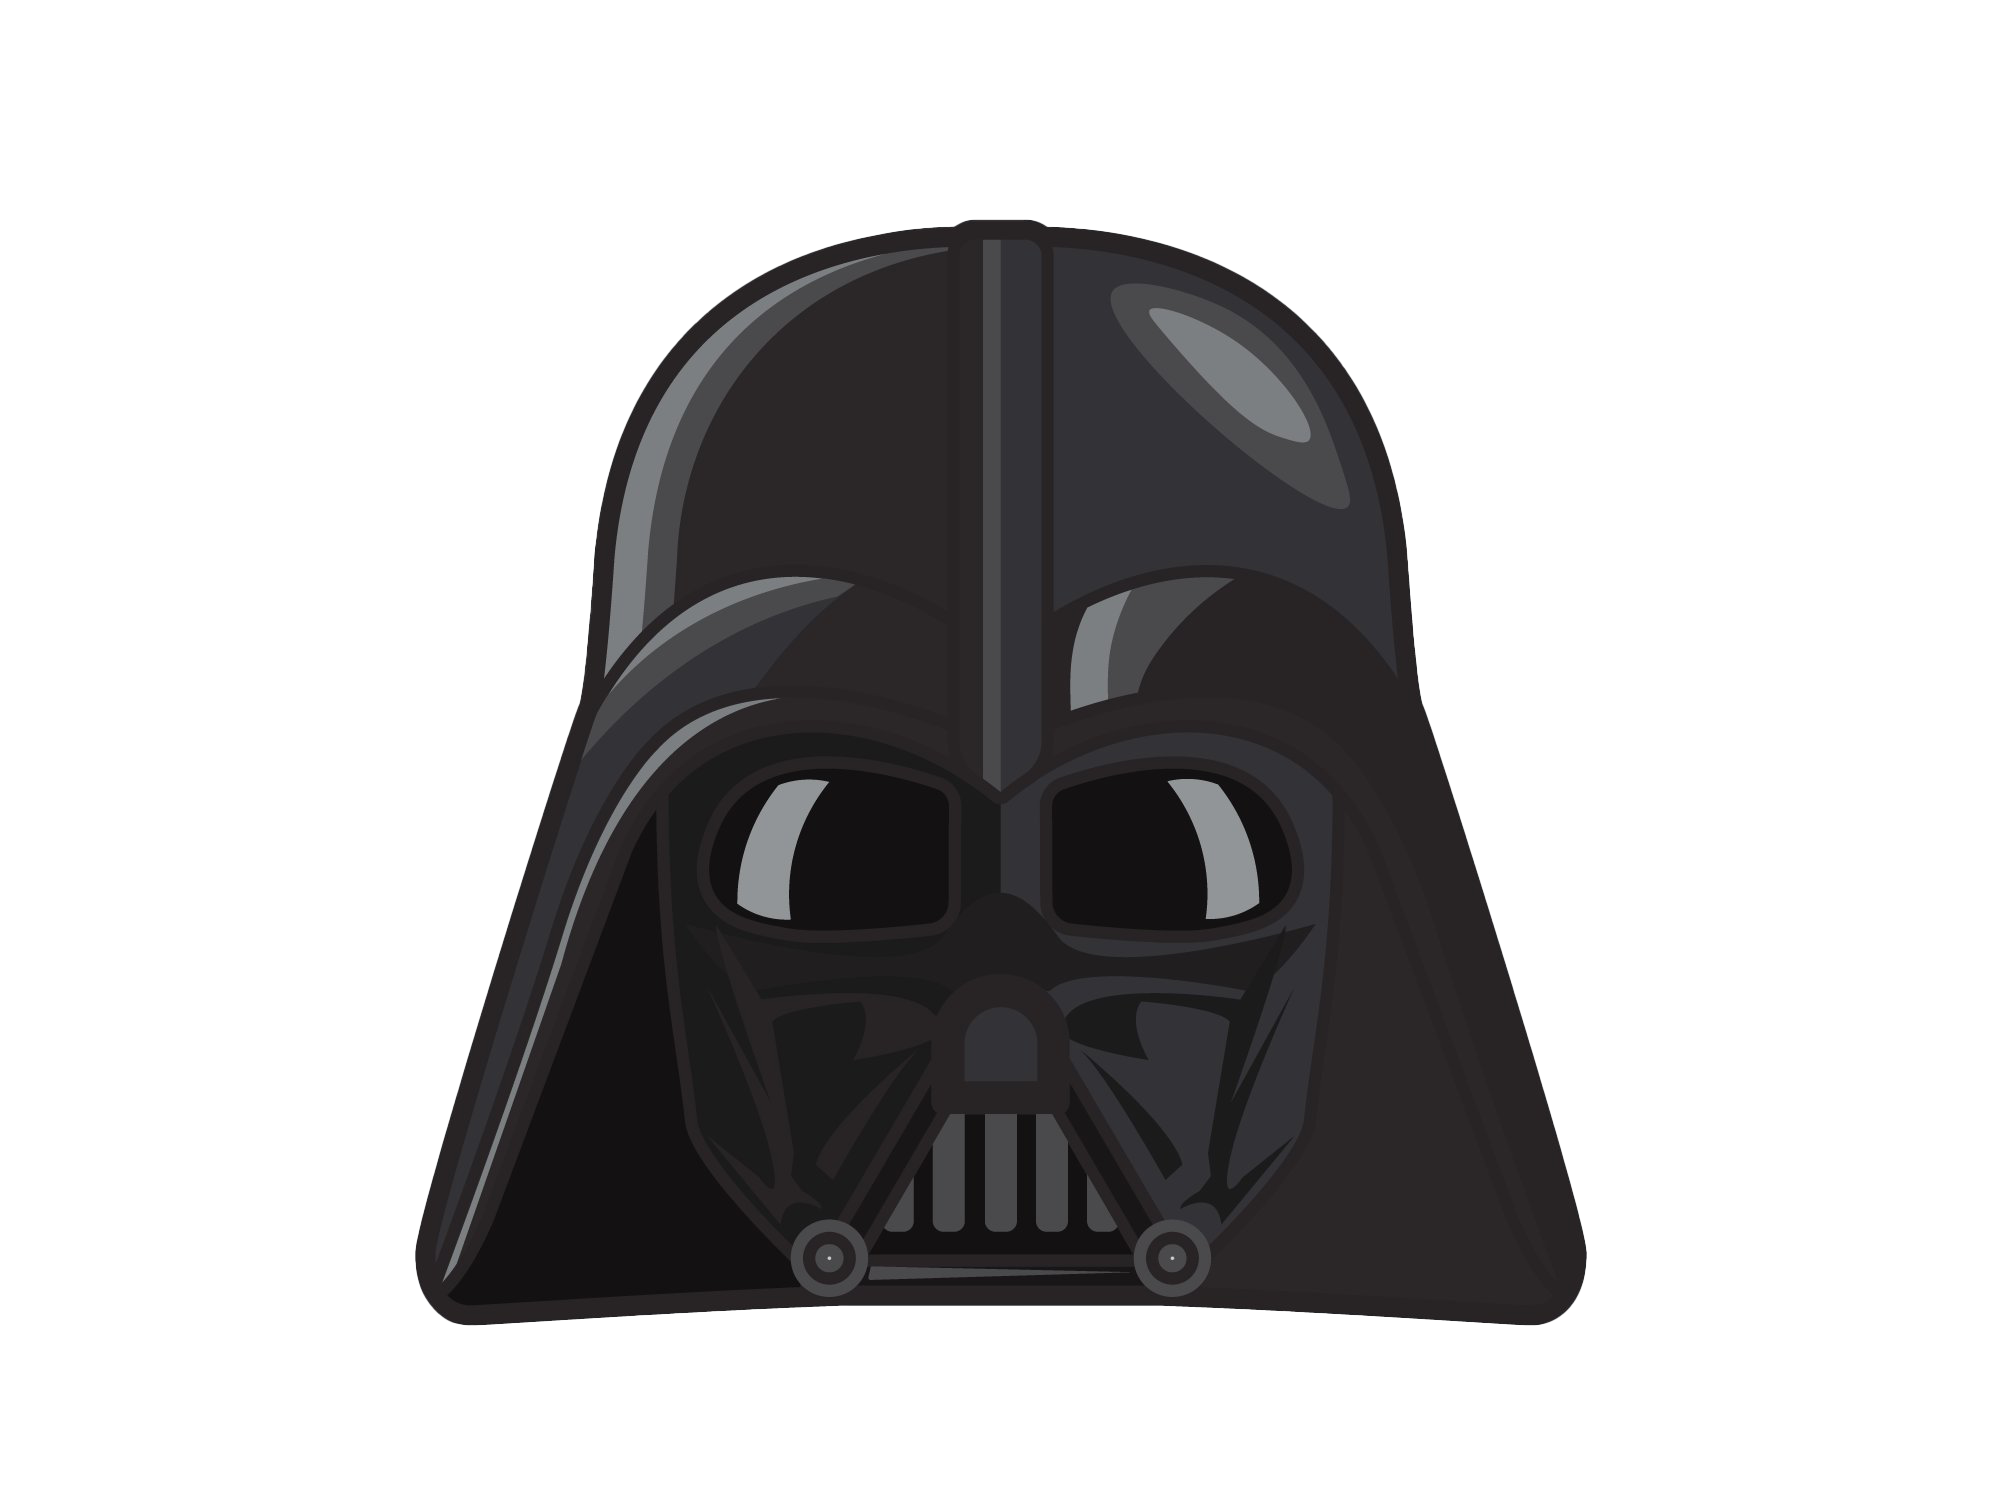 Darth Vader Helmet PNG Pic.